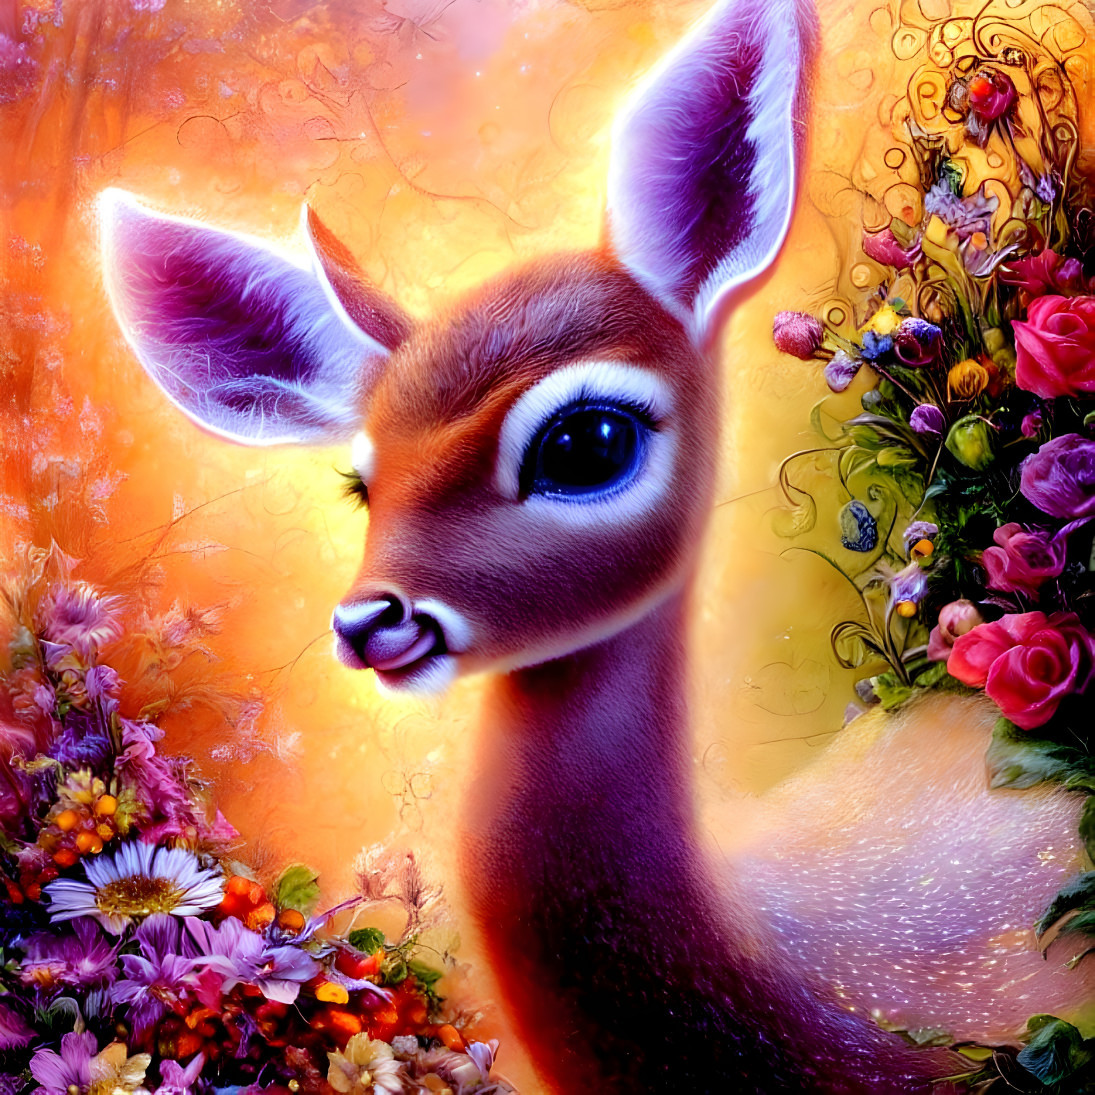  Bambi 